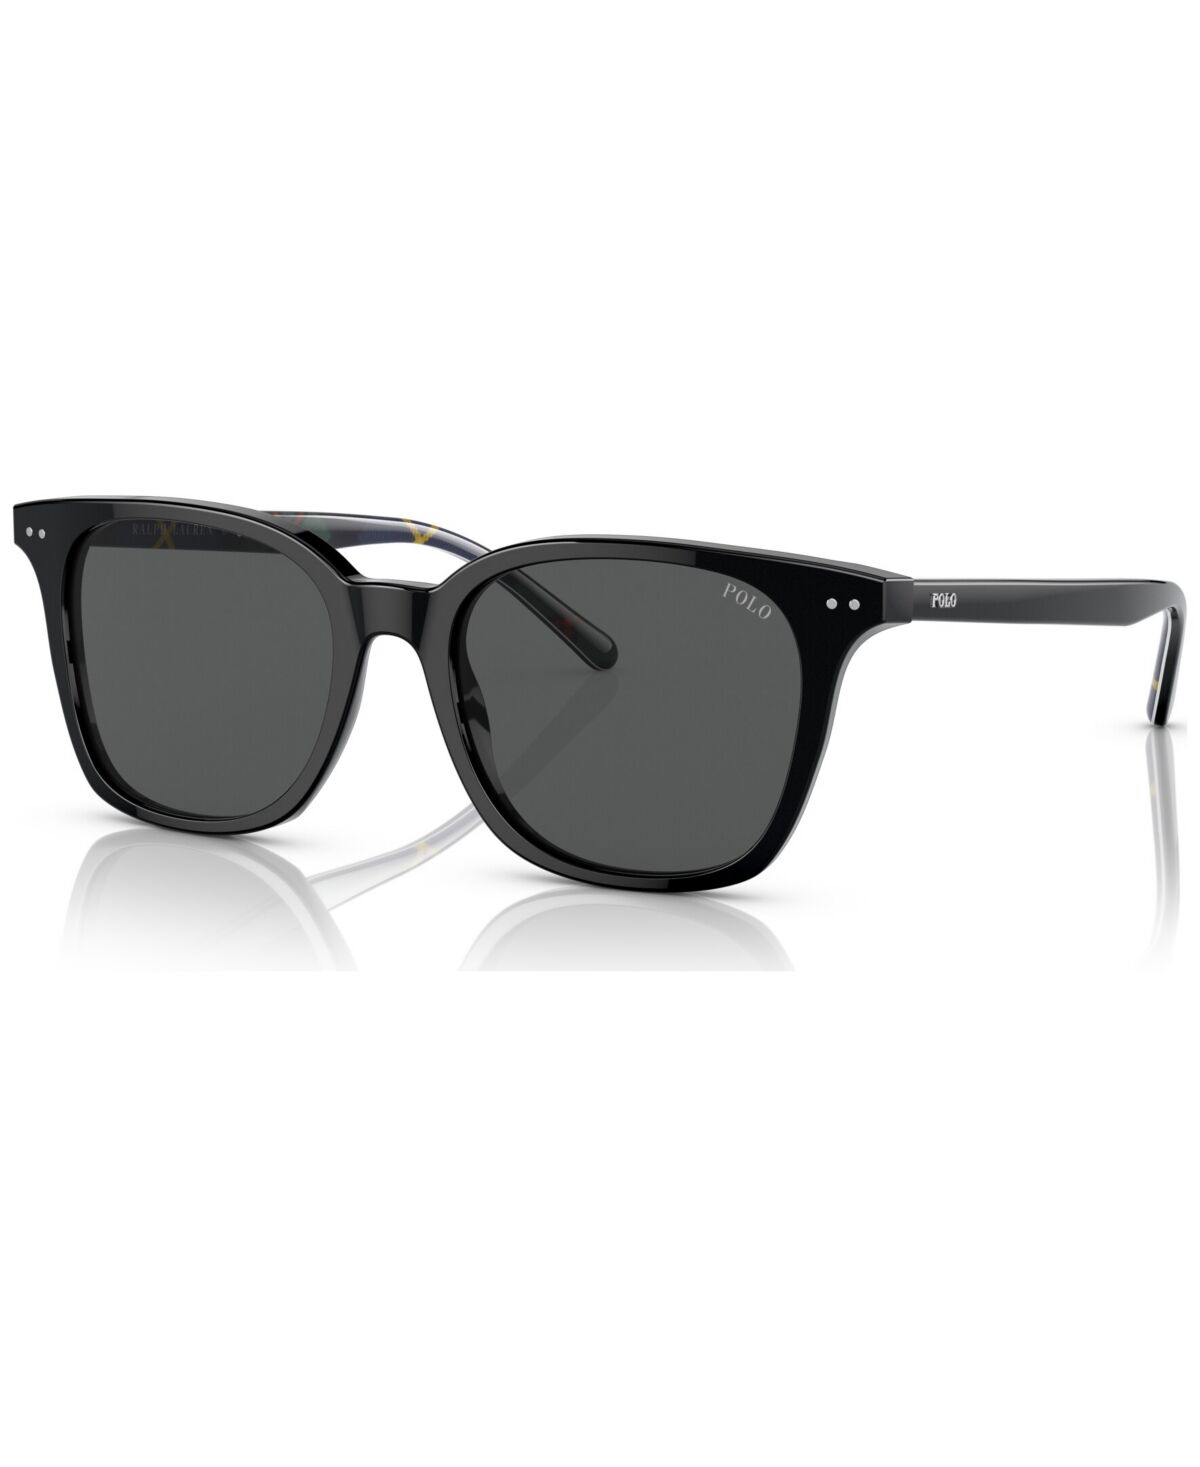 Ralph Lauren Polo Ralph Lauren Men's Sunglasses, PH4187 - Shiny Black